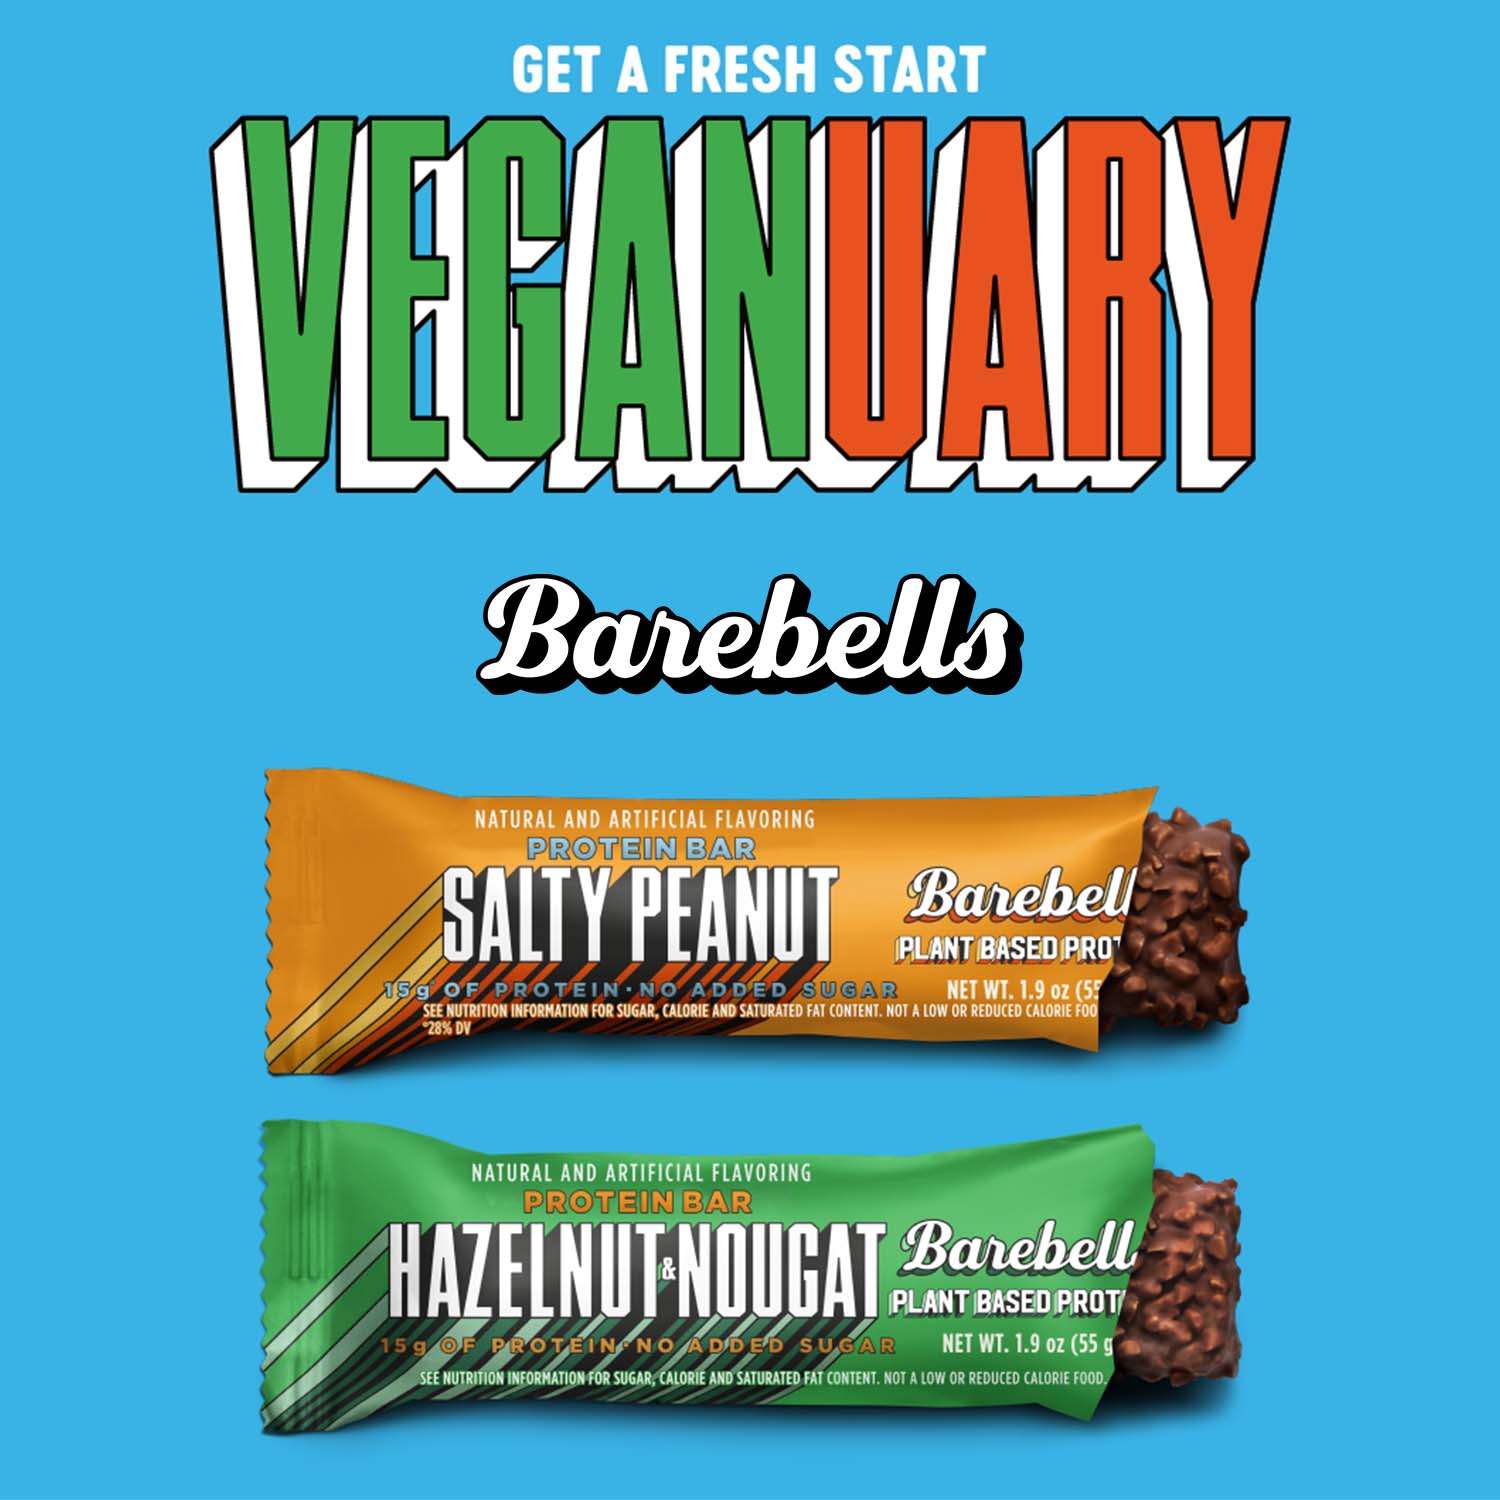 Celebrate Veganuary With Barebells Plant Based Bars